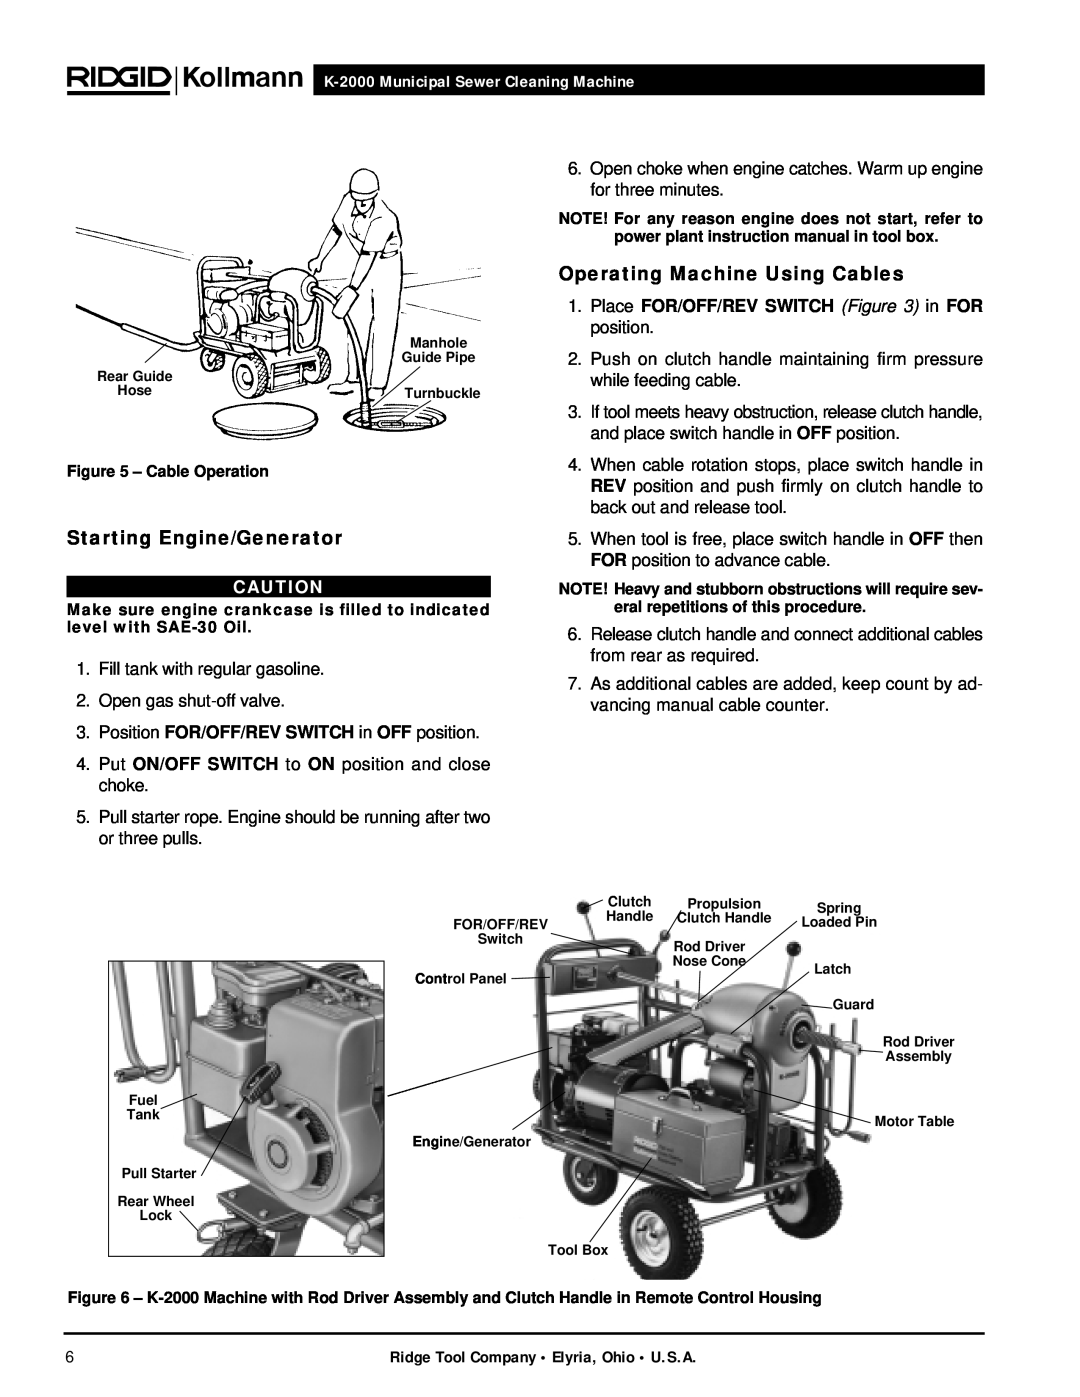 RIDGID manual Starting Engine/Generator, Operating Machine Using Cables, K-2000 Municipal Sewer Cleaning Machine 